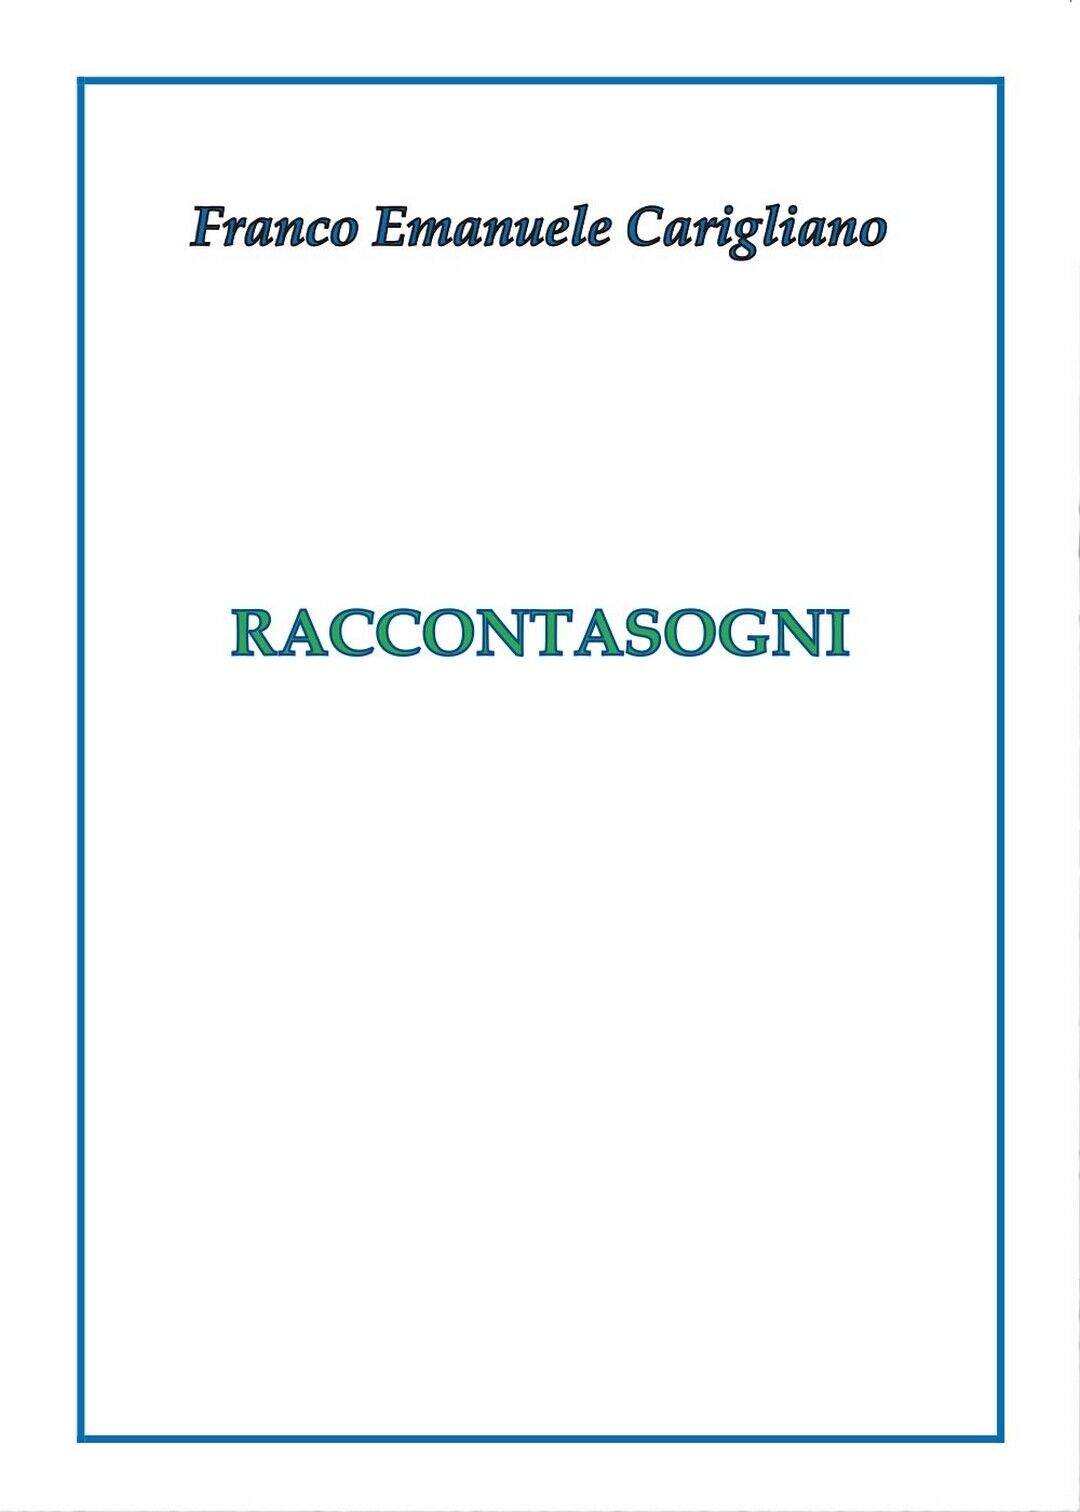 Raccontasogni  di Franco Emanuele Carigliano,  2017,  Youcanprint